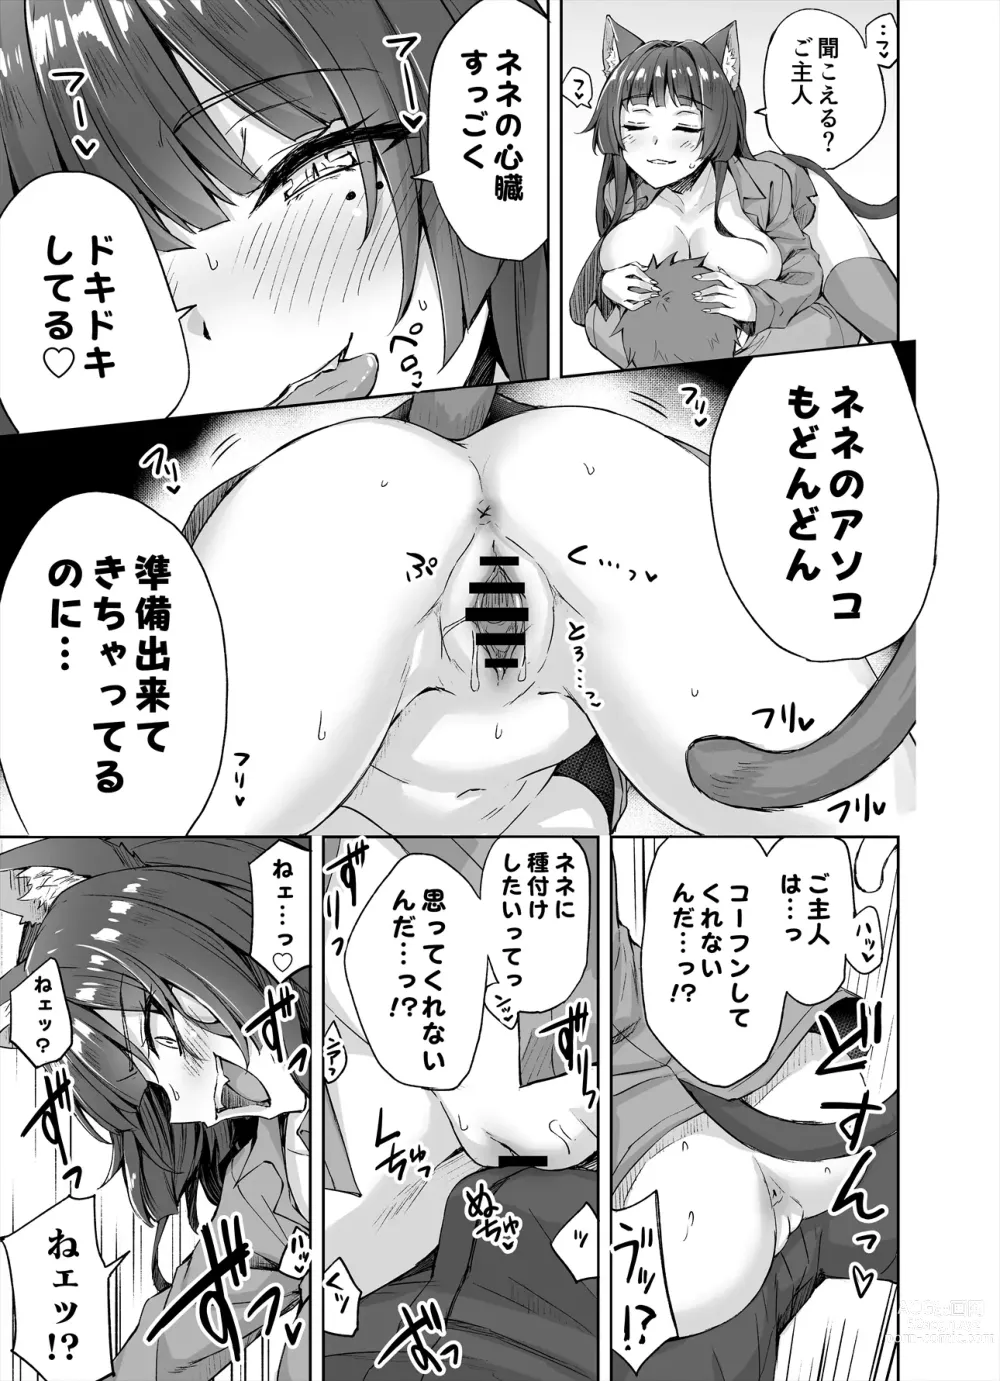 Page 4 of doujinshi Yandere-kai Neko-chan Seijin Manga #01